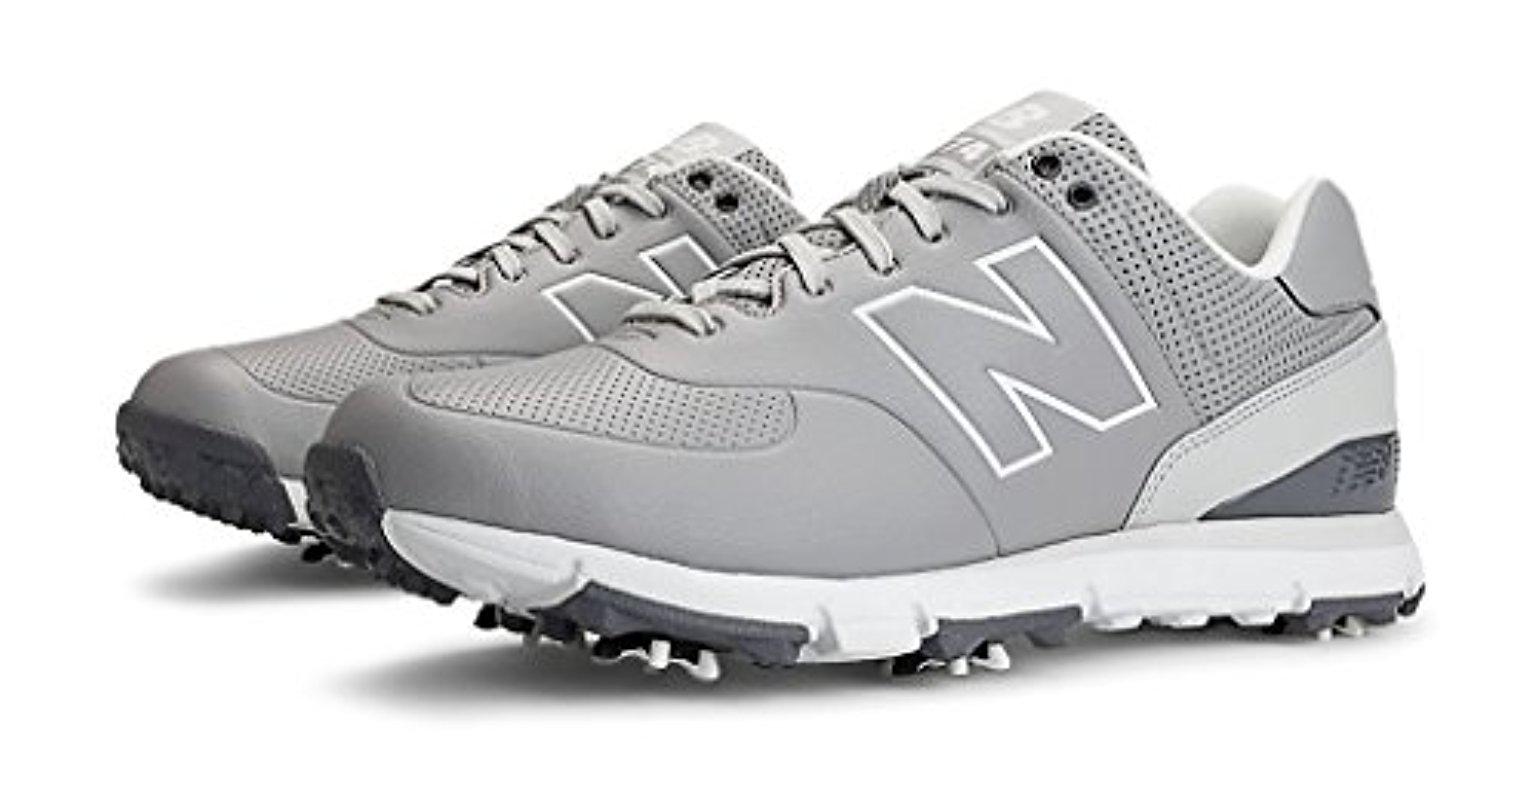 new balance mens nbg574 golf shoes